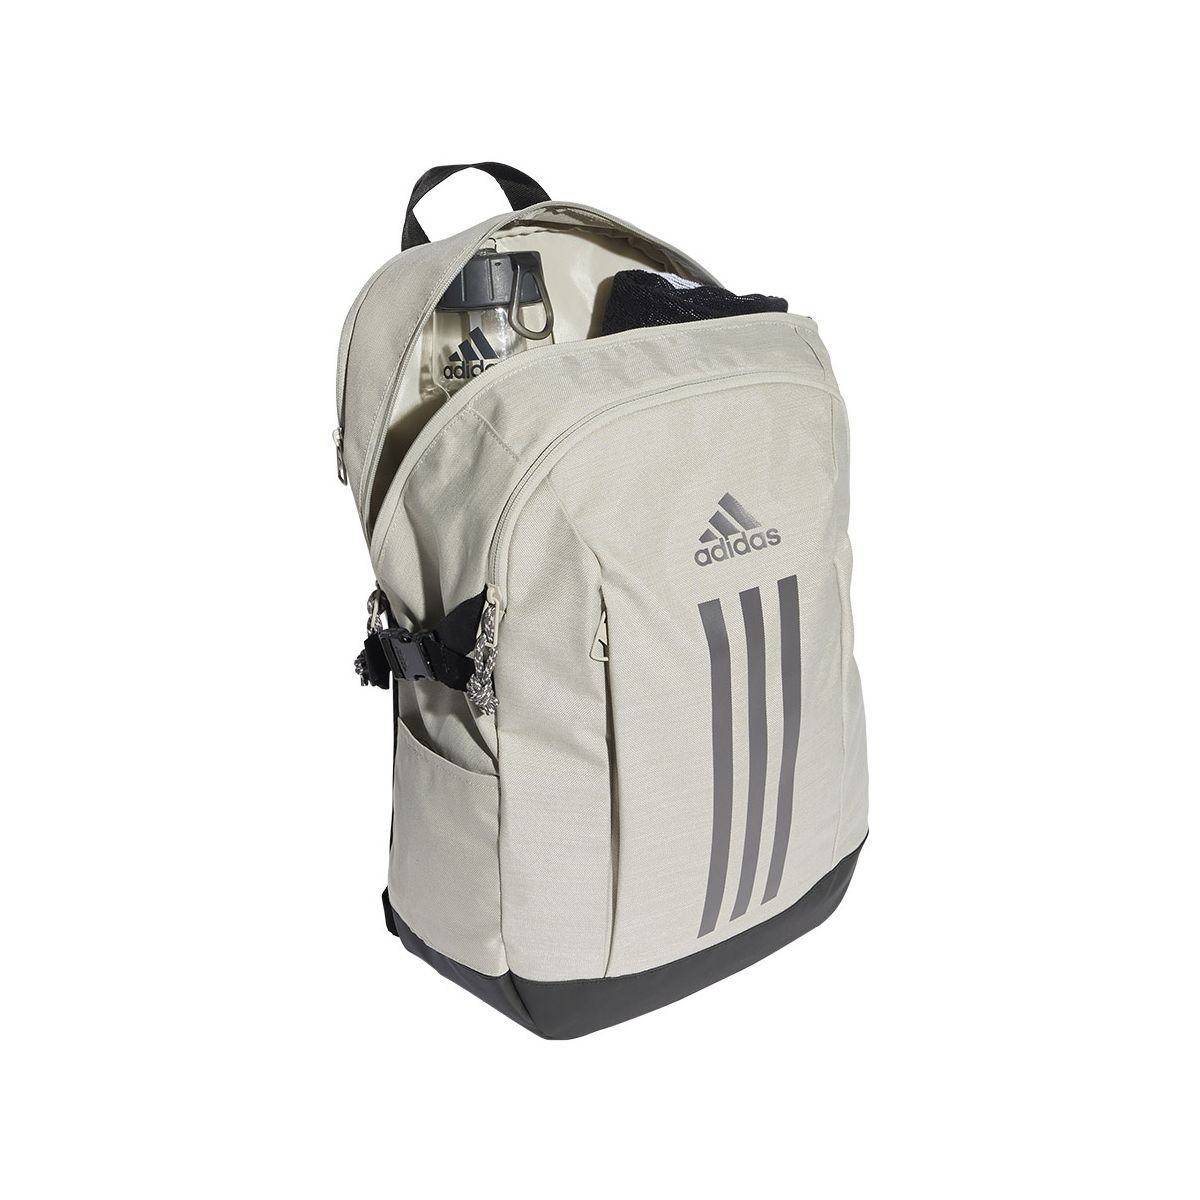 Plecak Adidas POWER VII beżowy (IT5361)